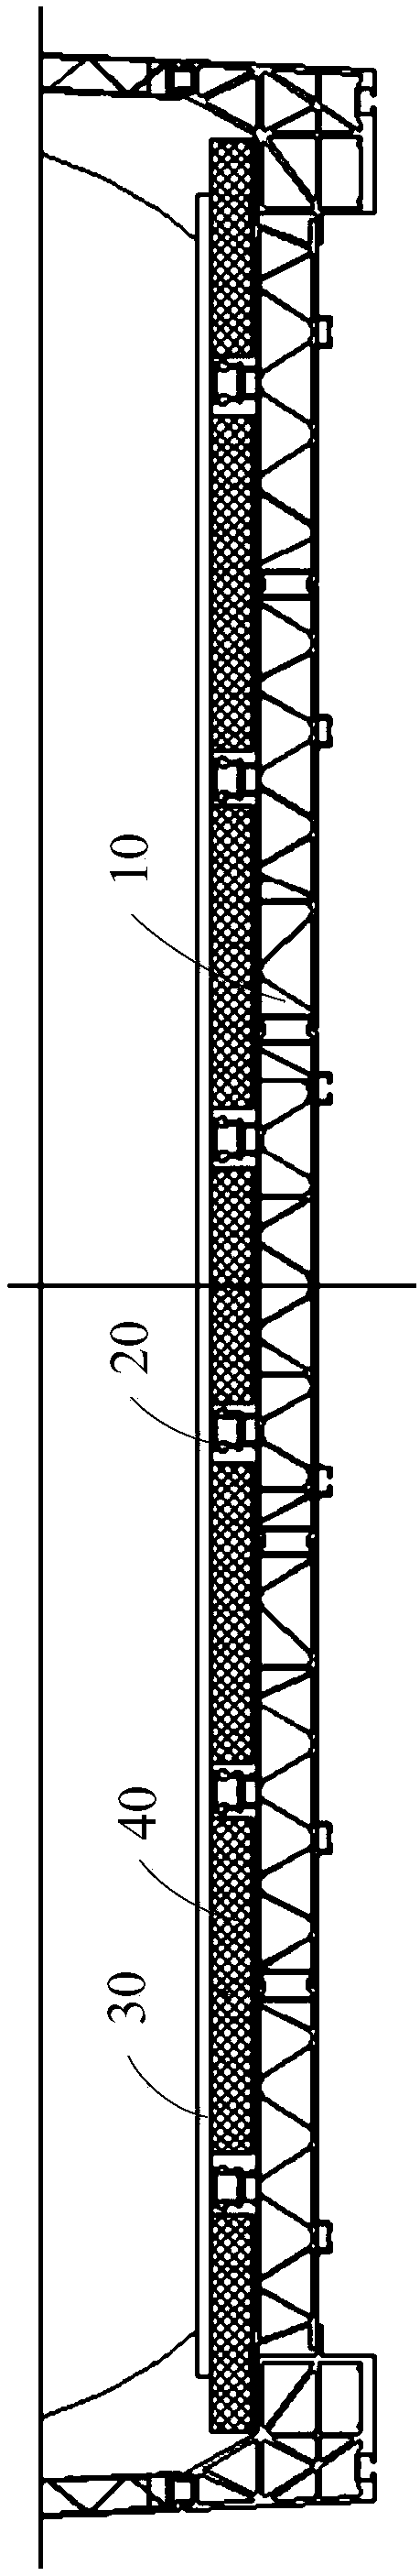 High speed train modular floor and mounting method of modular floor